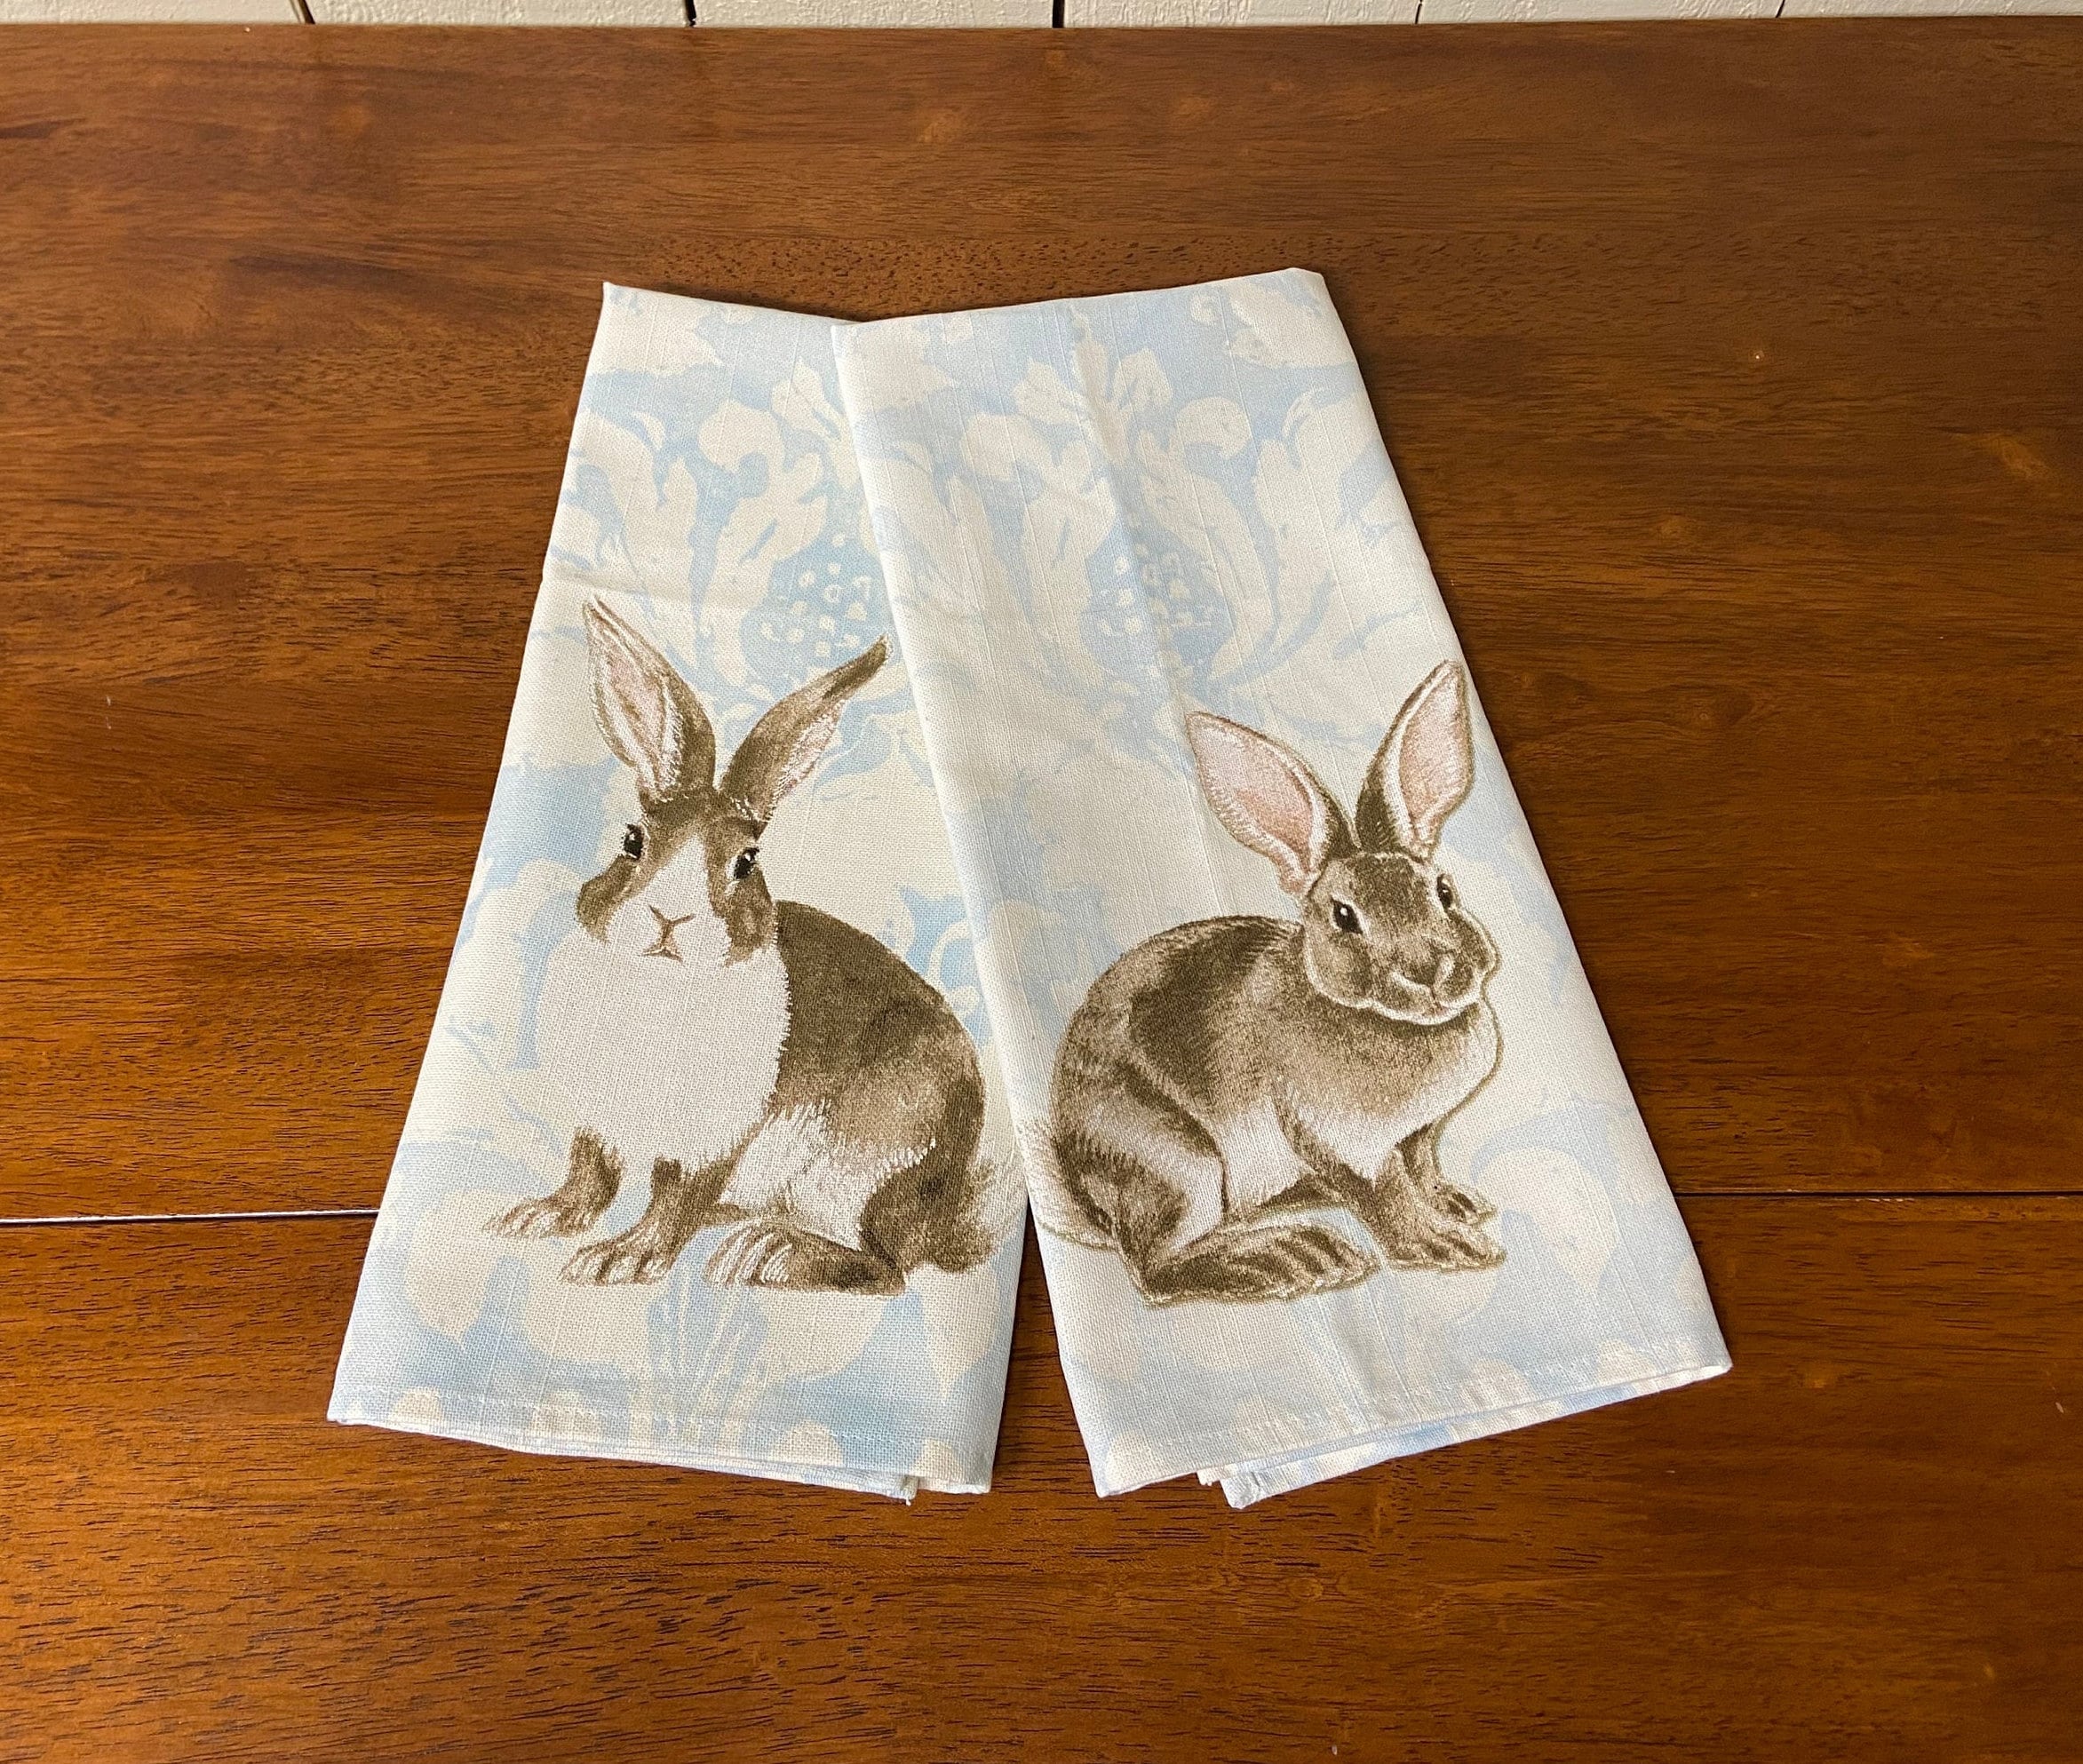 Williams Sonoma print cotton kitchen dish tea towels, Easter bunny vintage  style graphics